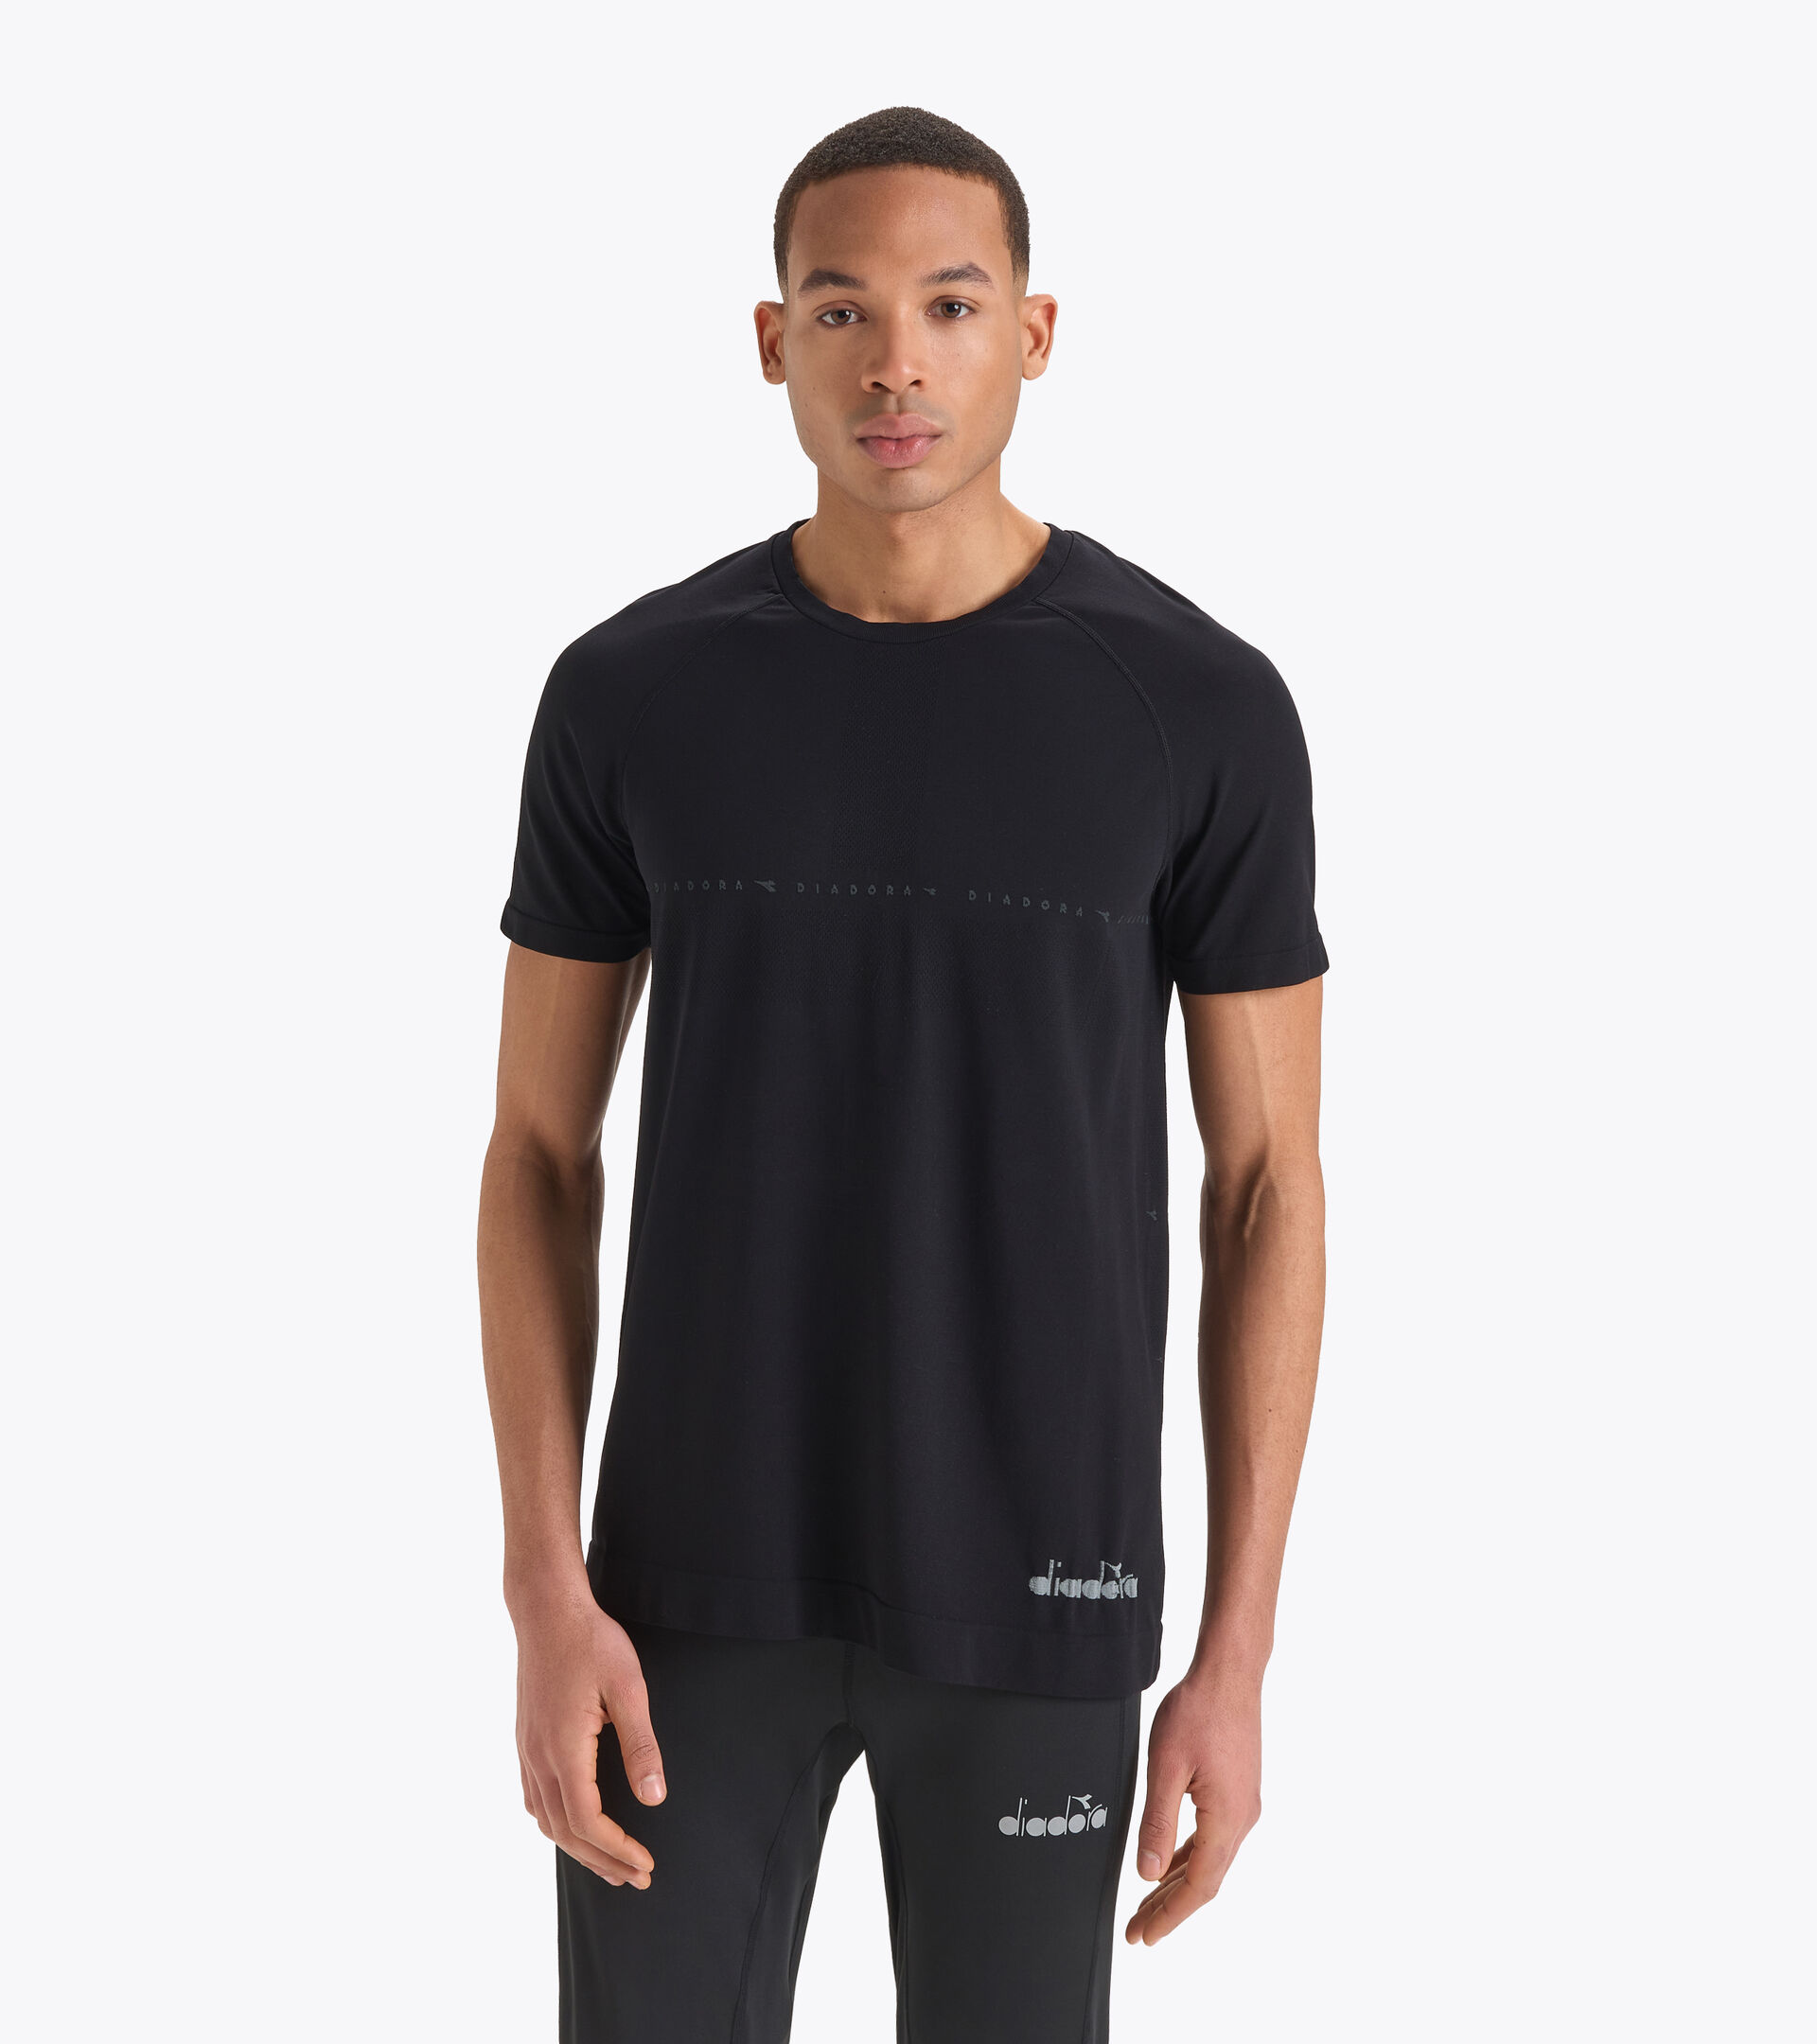 Made in Italy running t-shirt - Men  SS SKIN FRIENDLY T-SHIRT BLACK - Diadora